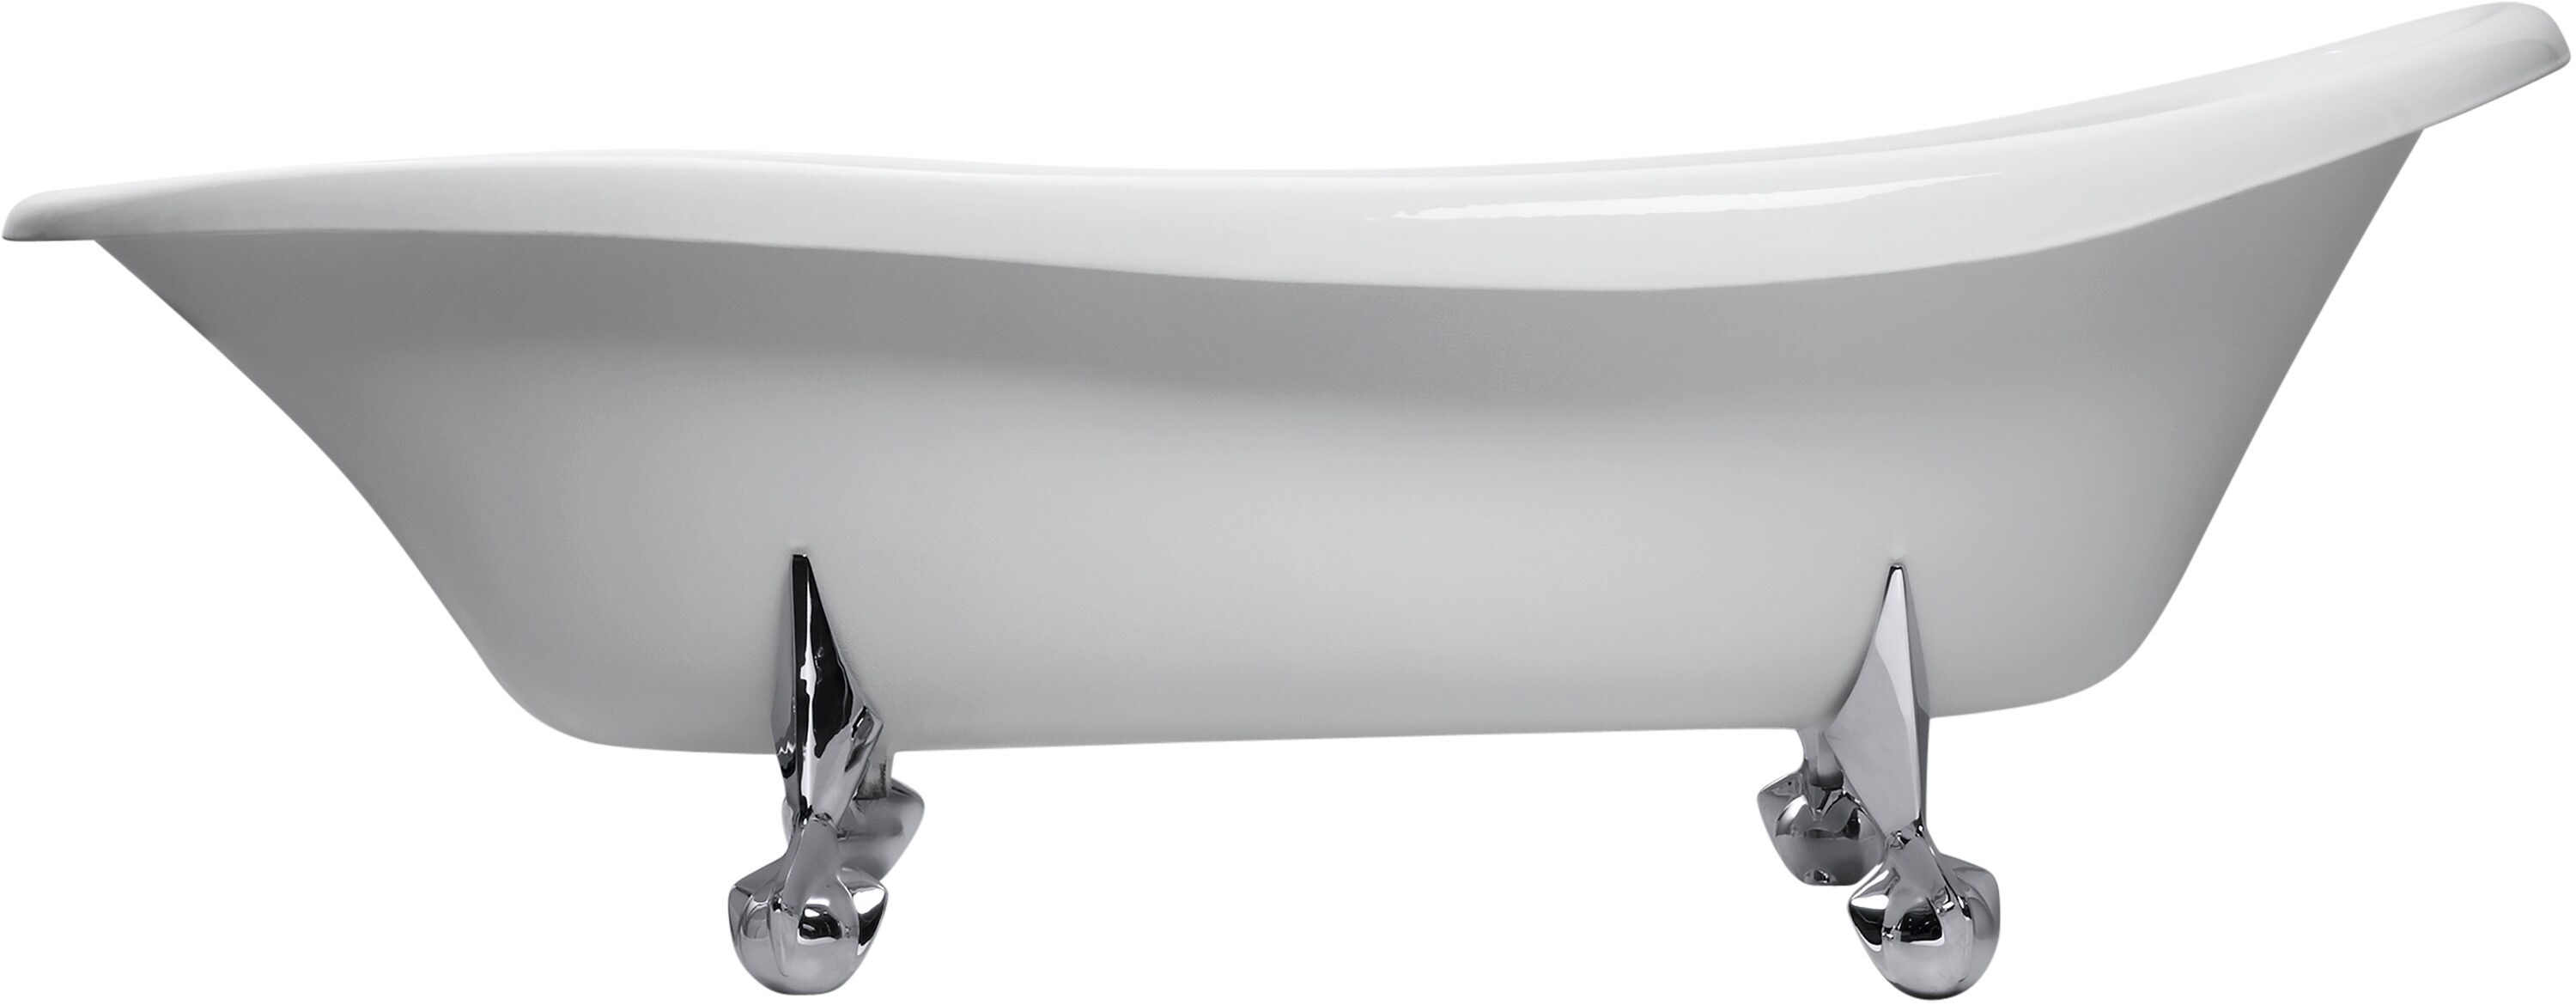 KOHLER Birthday Bath 37.5-in x 72-in White Cast Iron Clawfoot Soaking  Bathtub (Reversible Drain) at